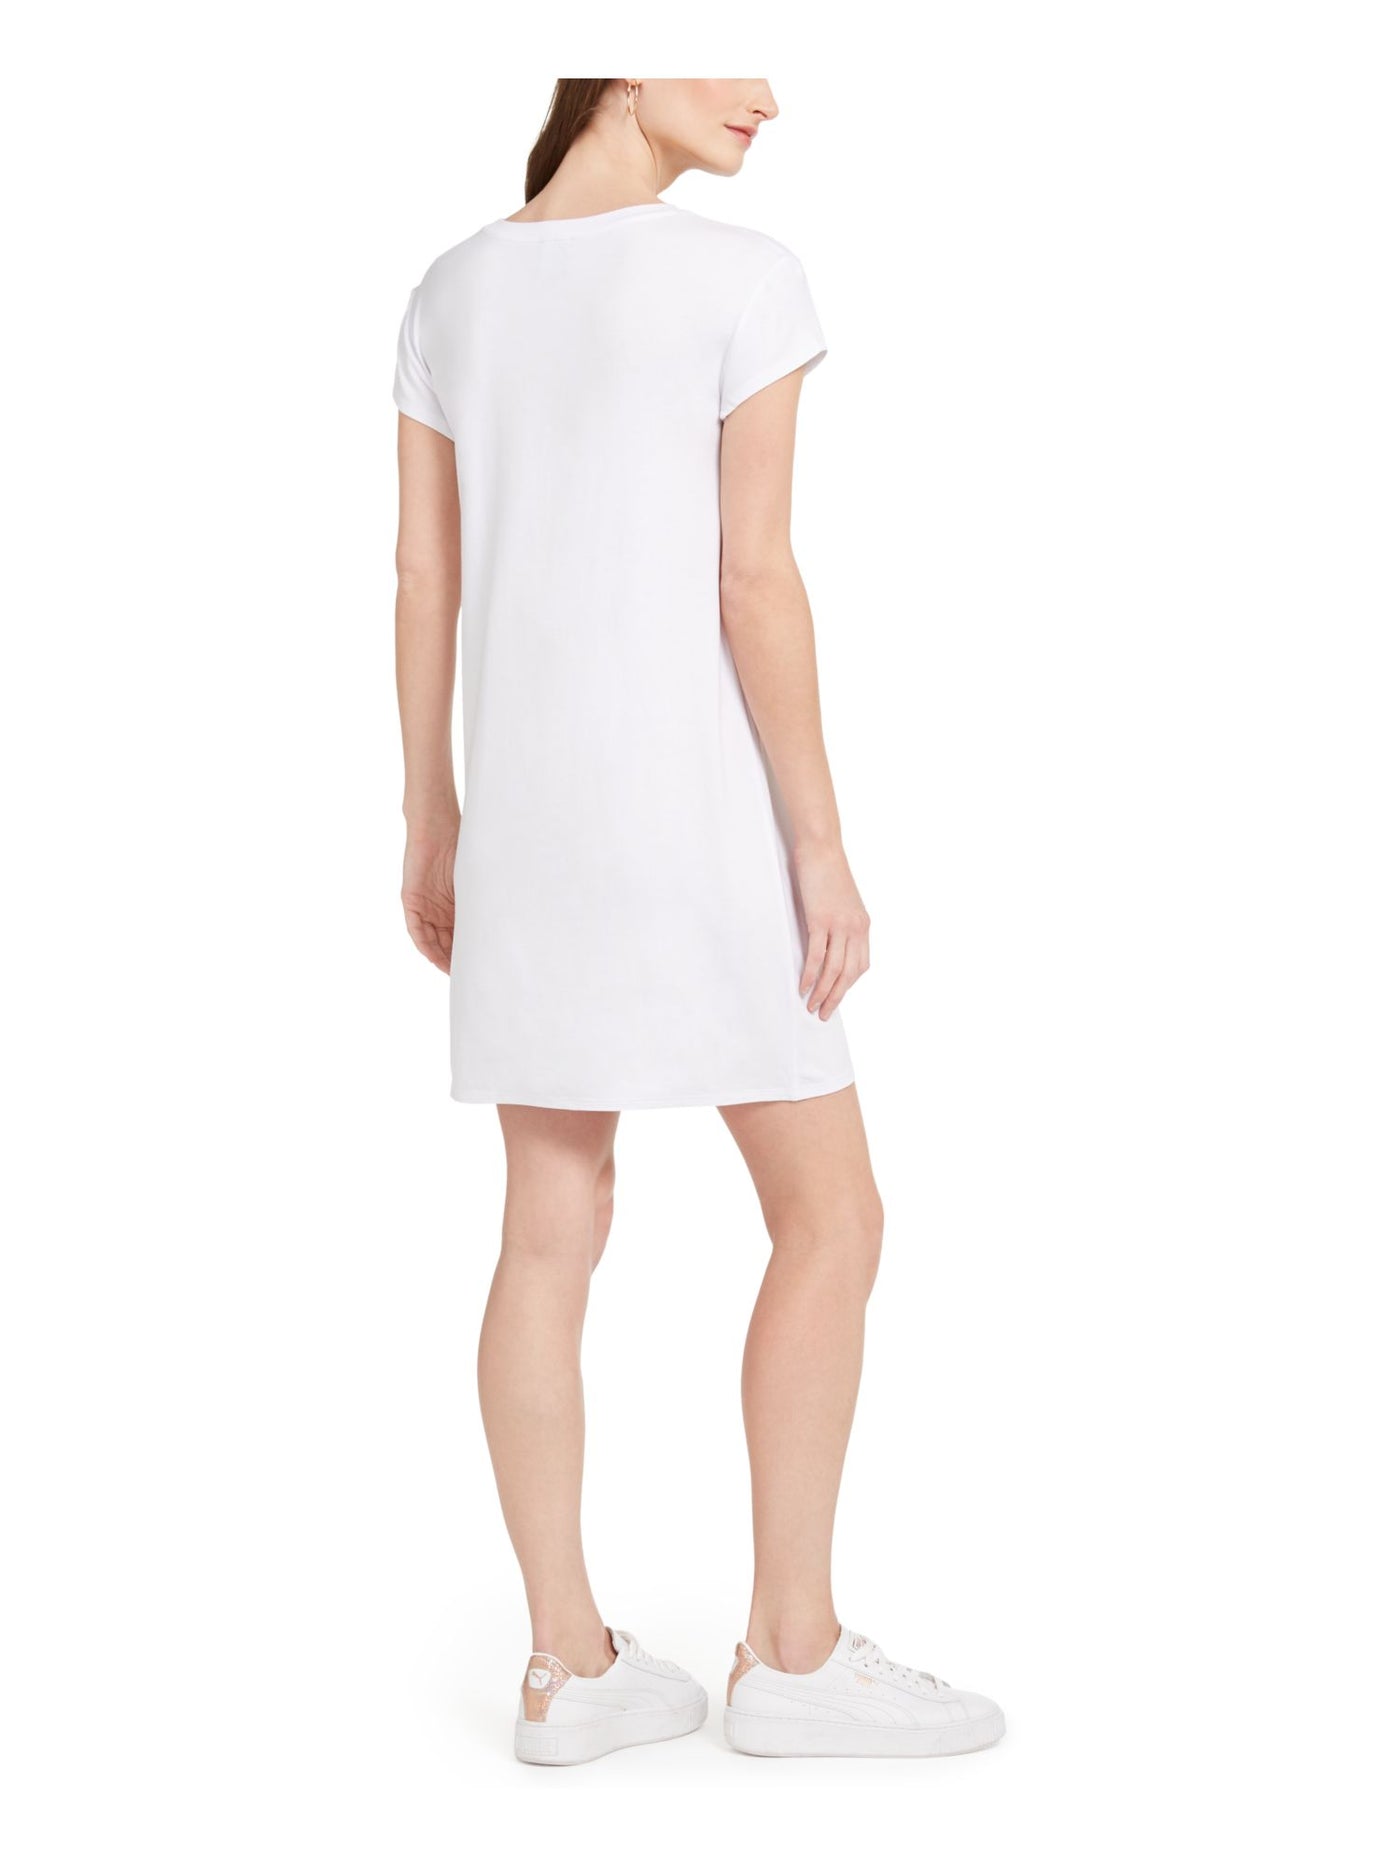 ADRIANNA PAPELL Womens White Logo Graphic Short Sleeve Jewel Neck Short Shift Dress XL